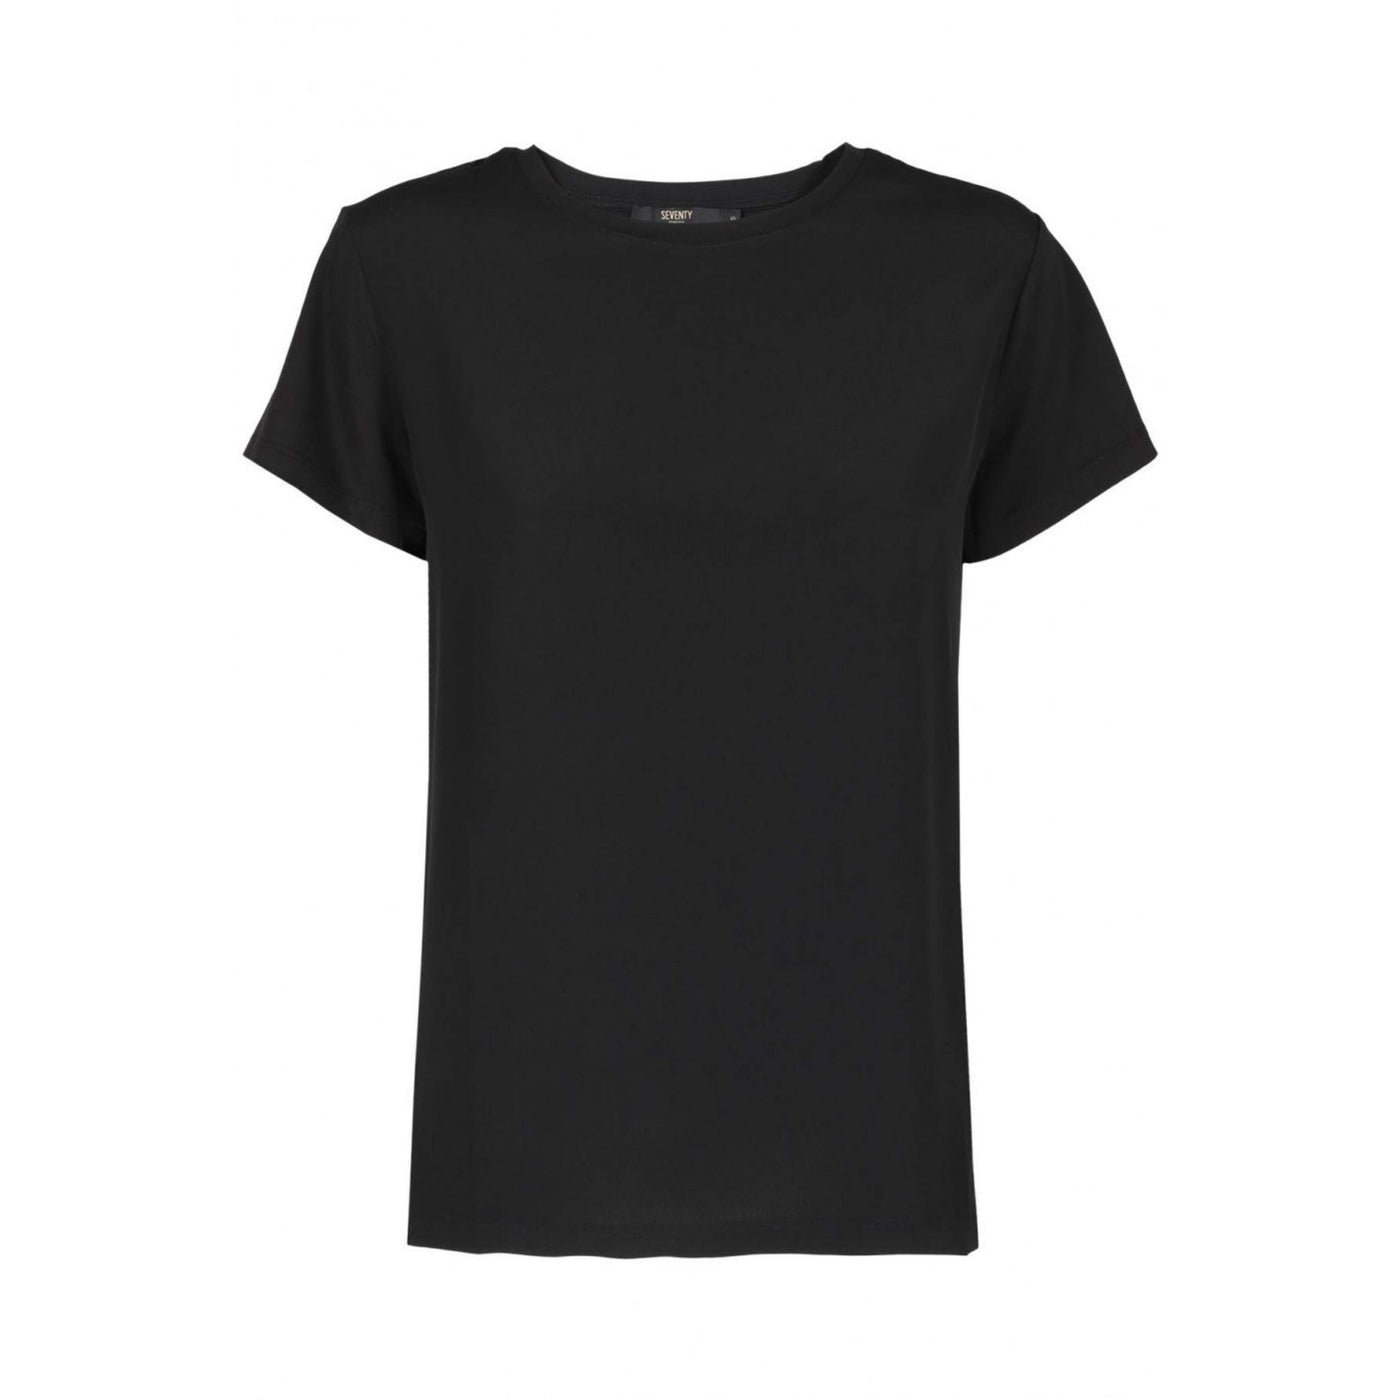 T-shirt donna nero firmata Seventy vista frontale